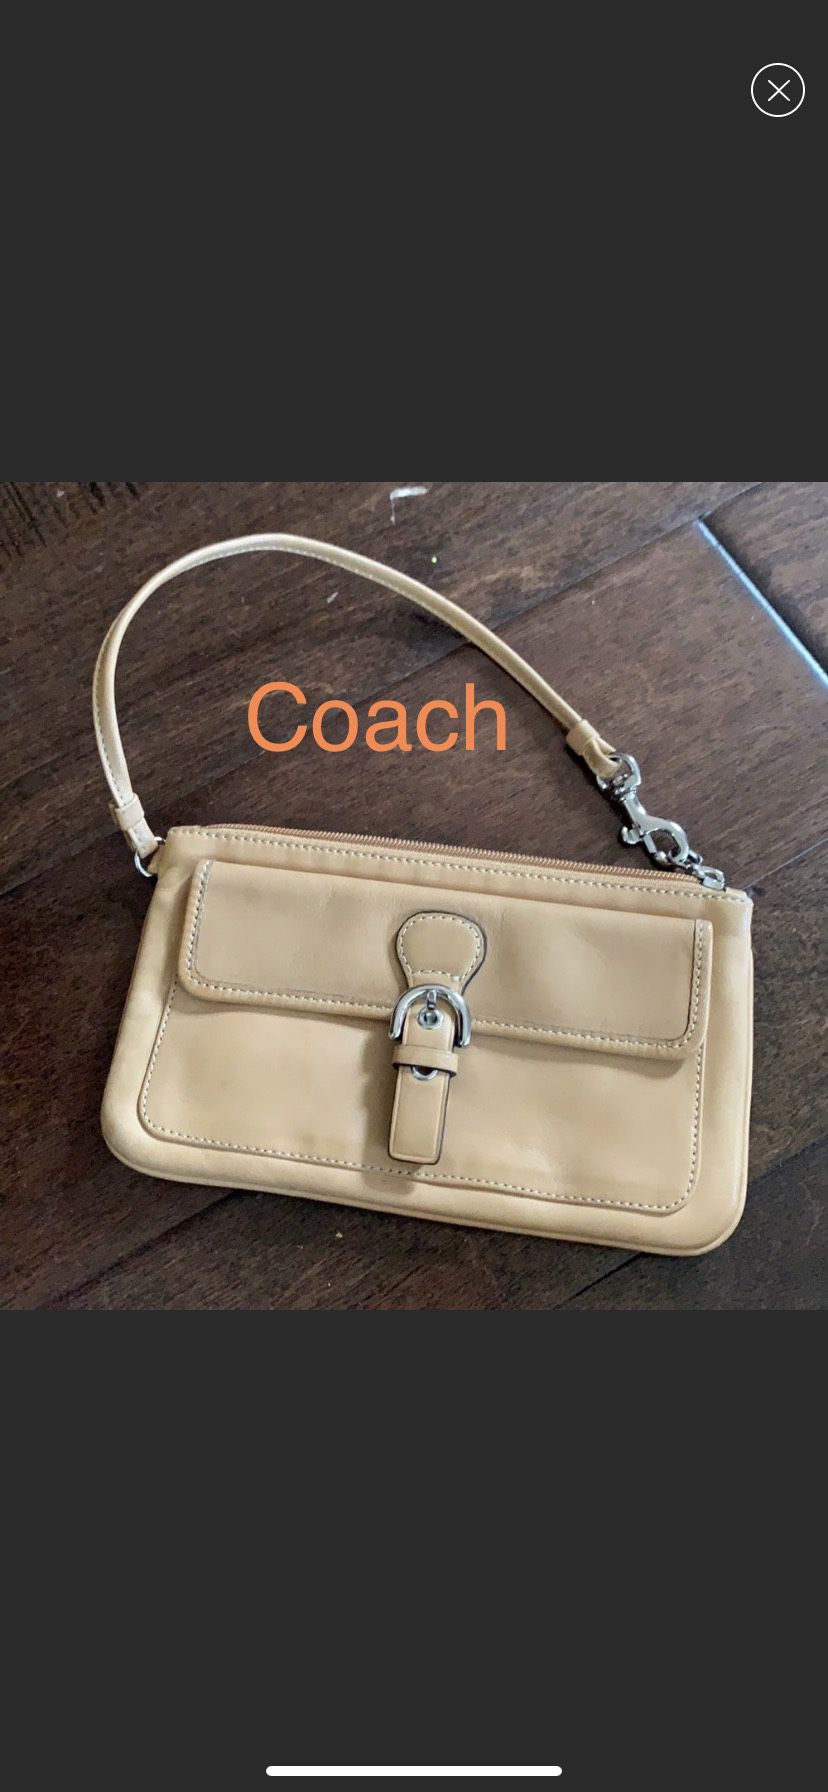 Coach genuine leather wristlet